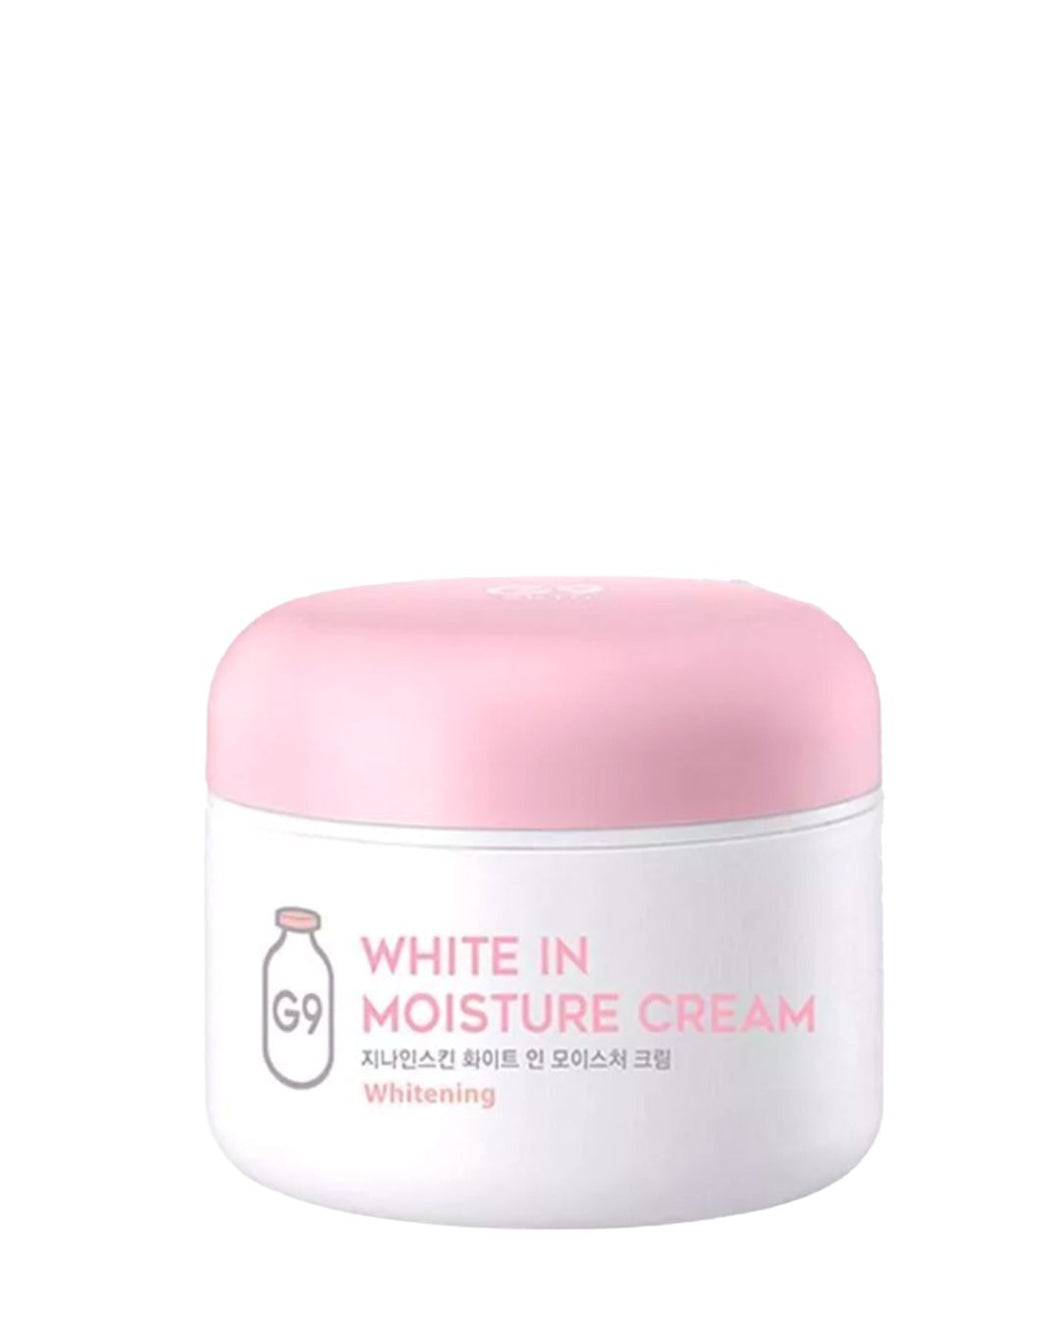 G9 Skin - White in Moisture Cream 100gr